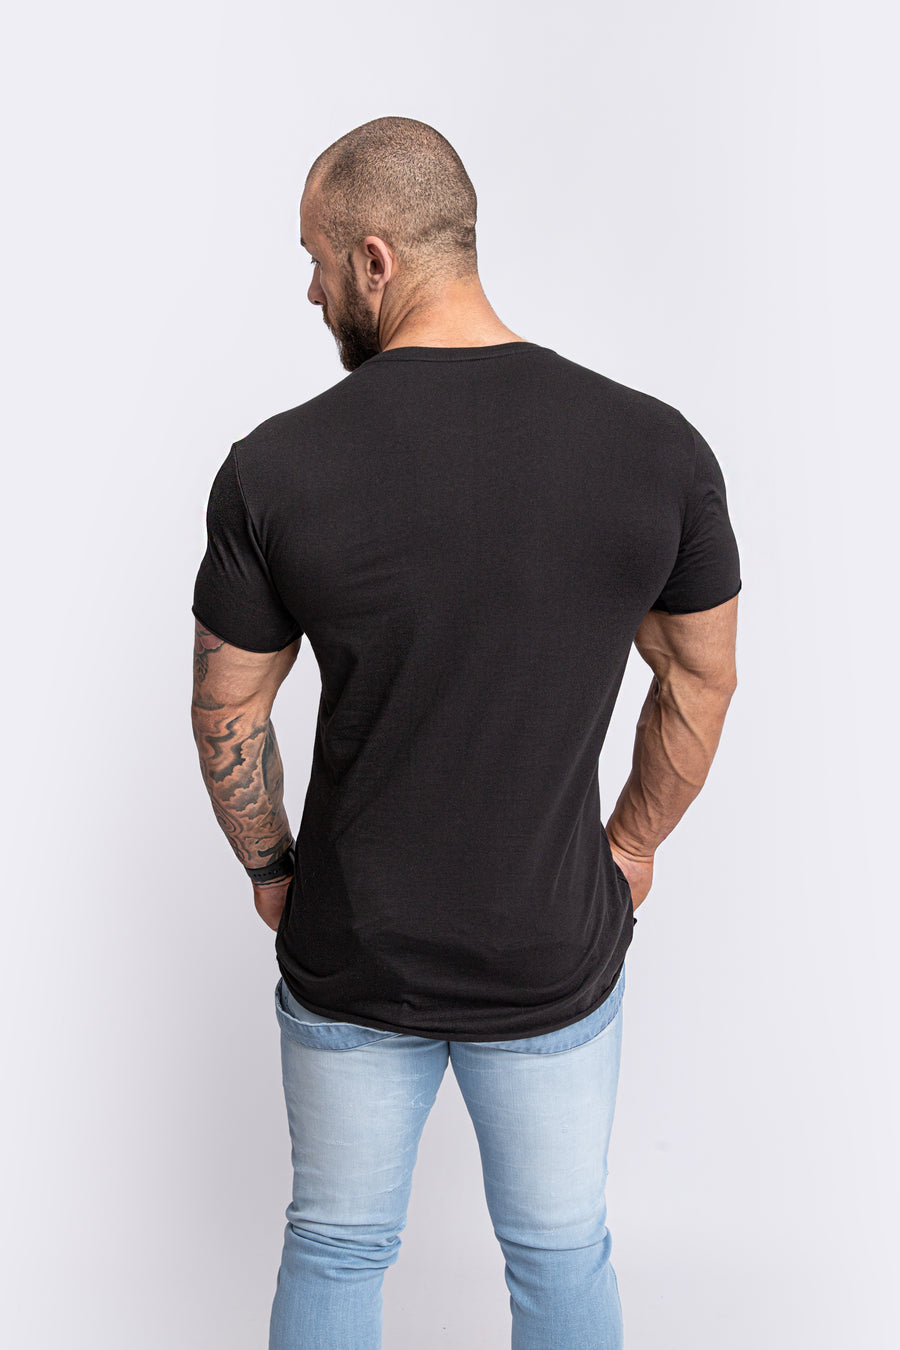 TEXAS Black Cotton T-Shirt